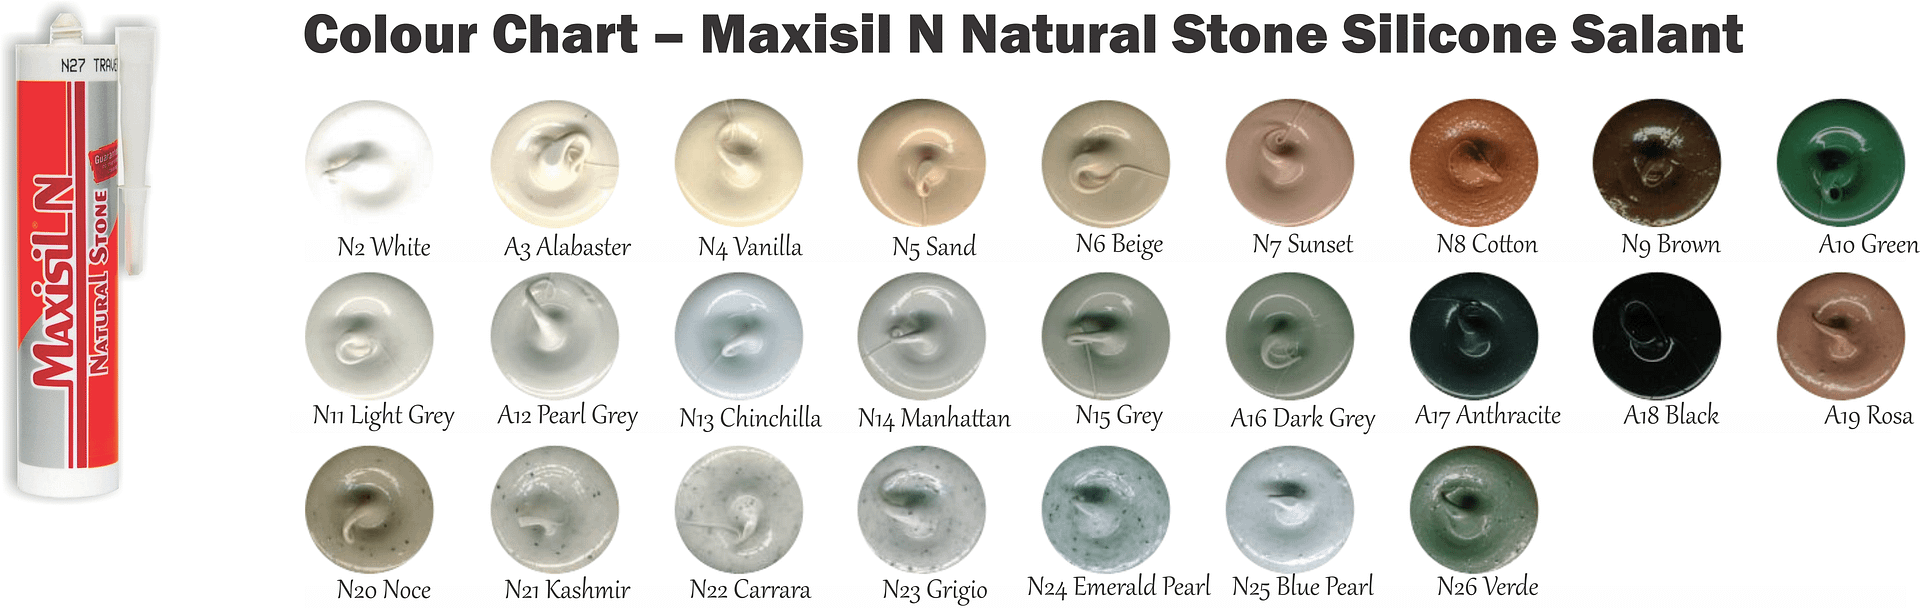 Colour Chart – Maxisil N Natural Stone Silicone Salant 